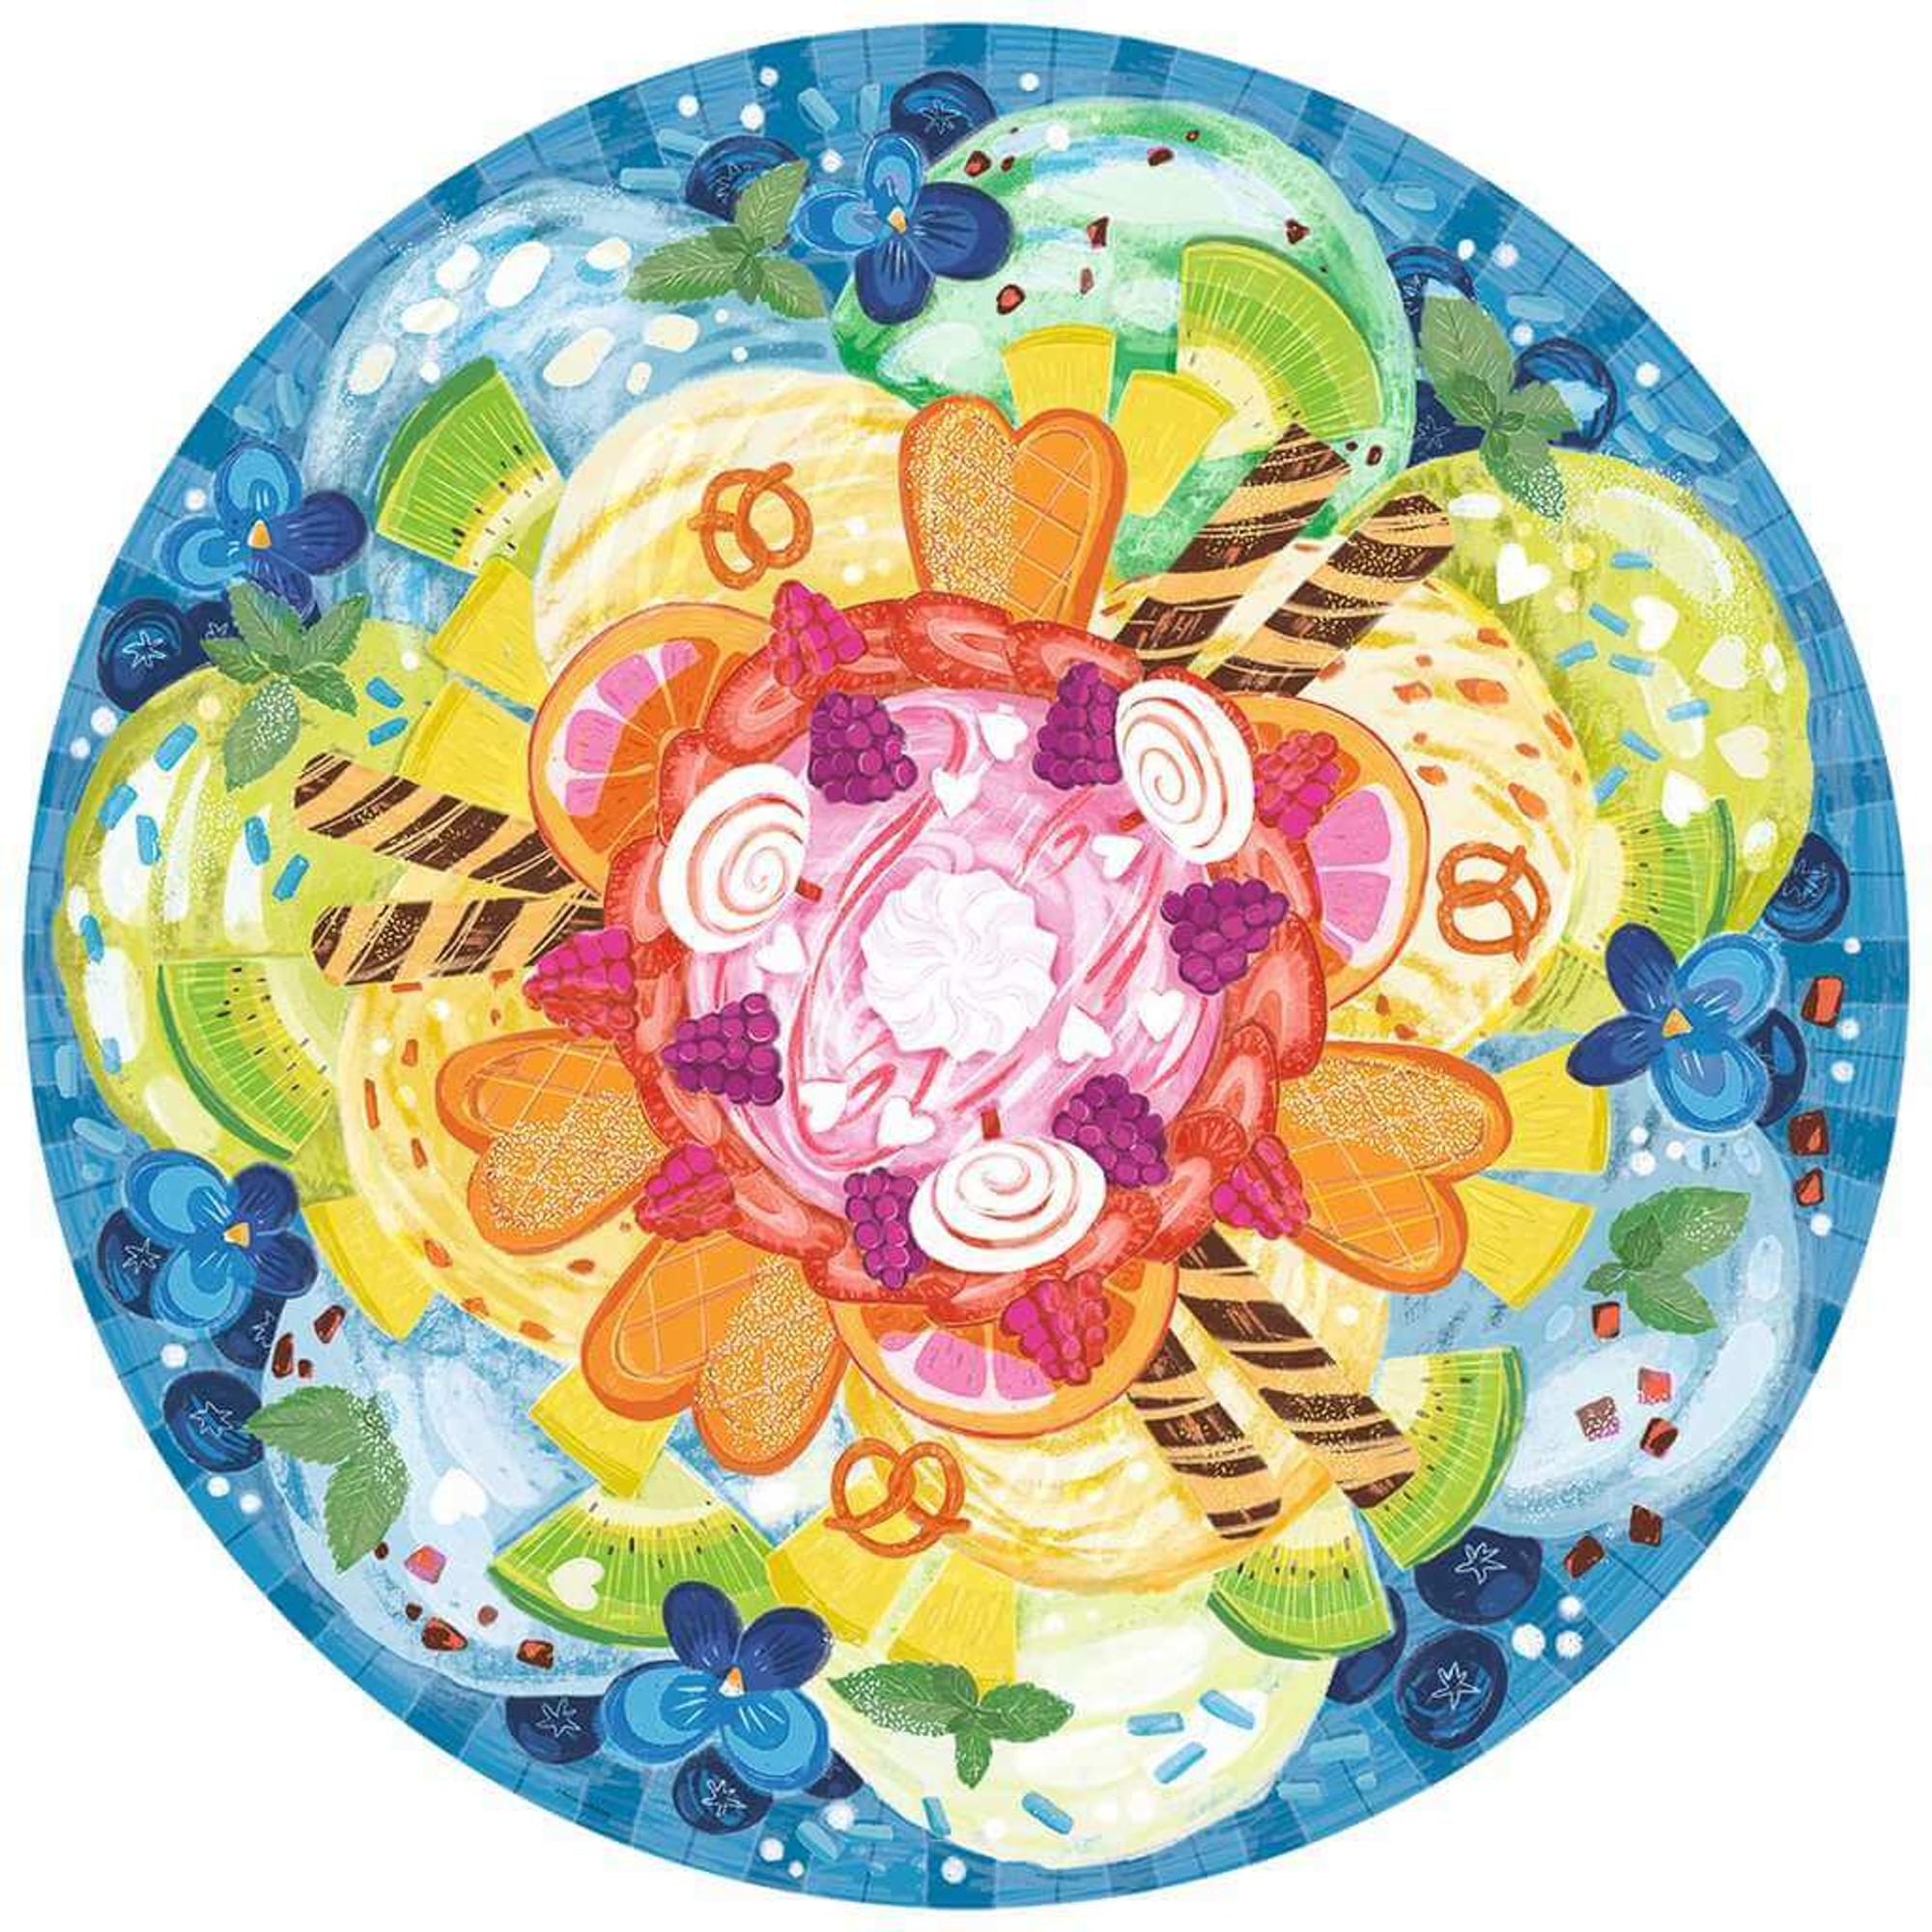 Ravensburger Circle of Colors: Ice Cream 500pc Puzzle